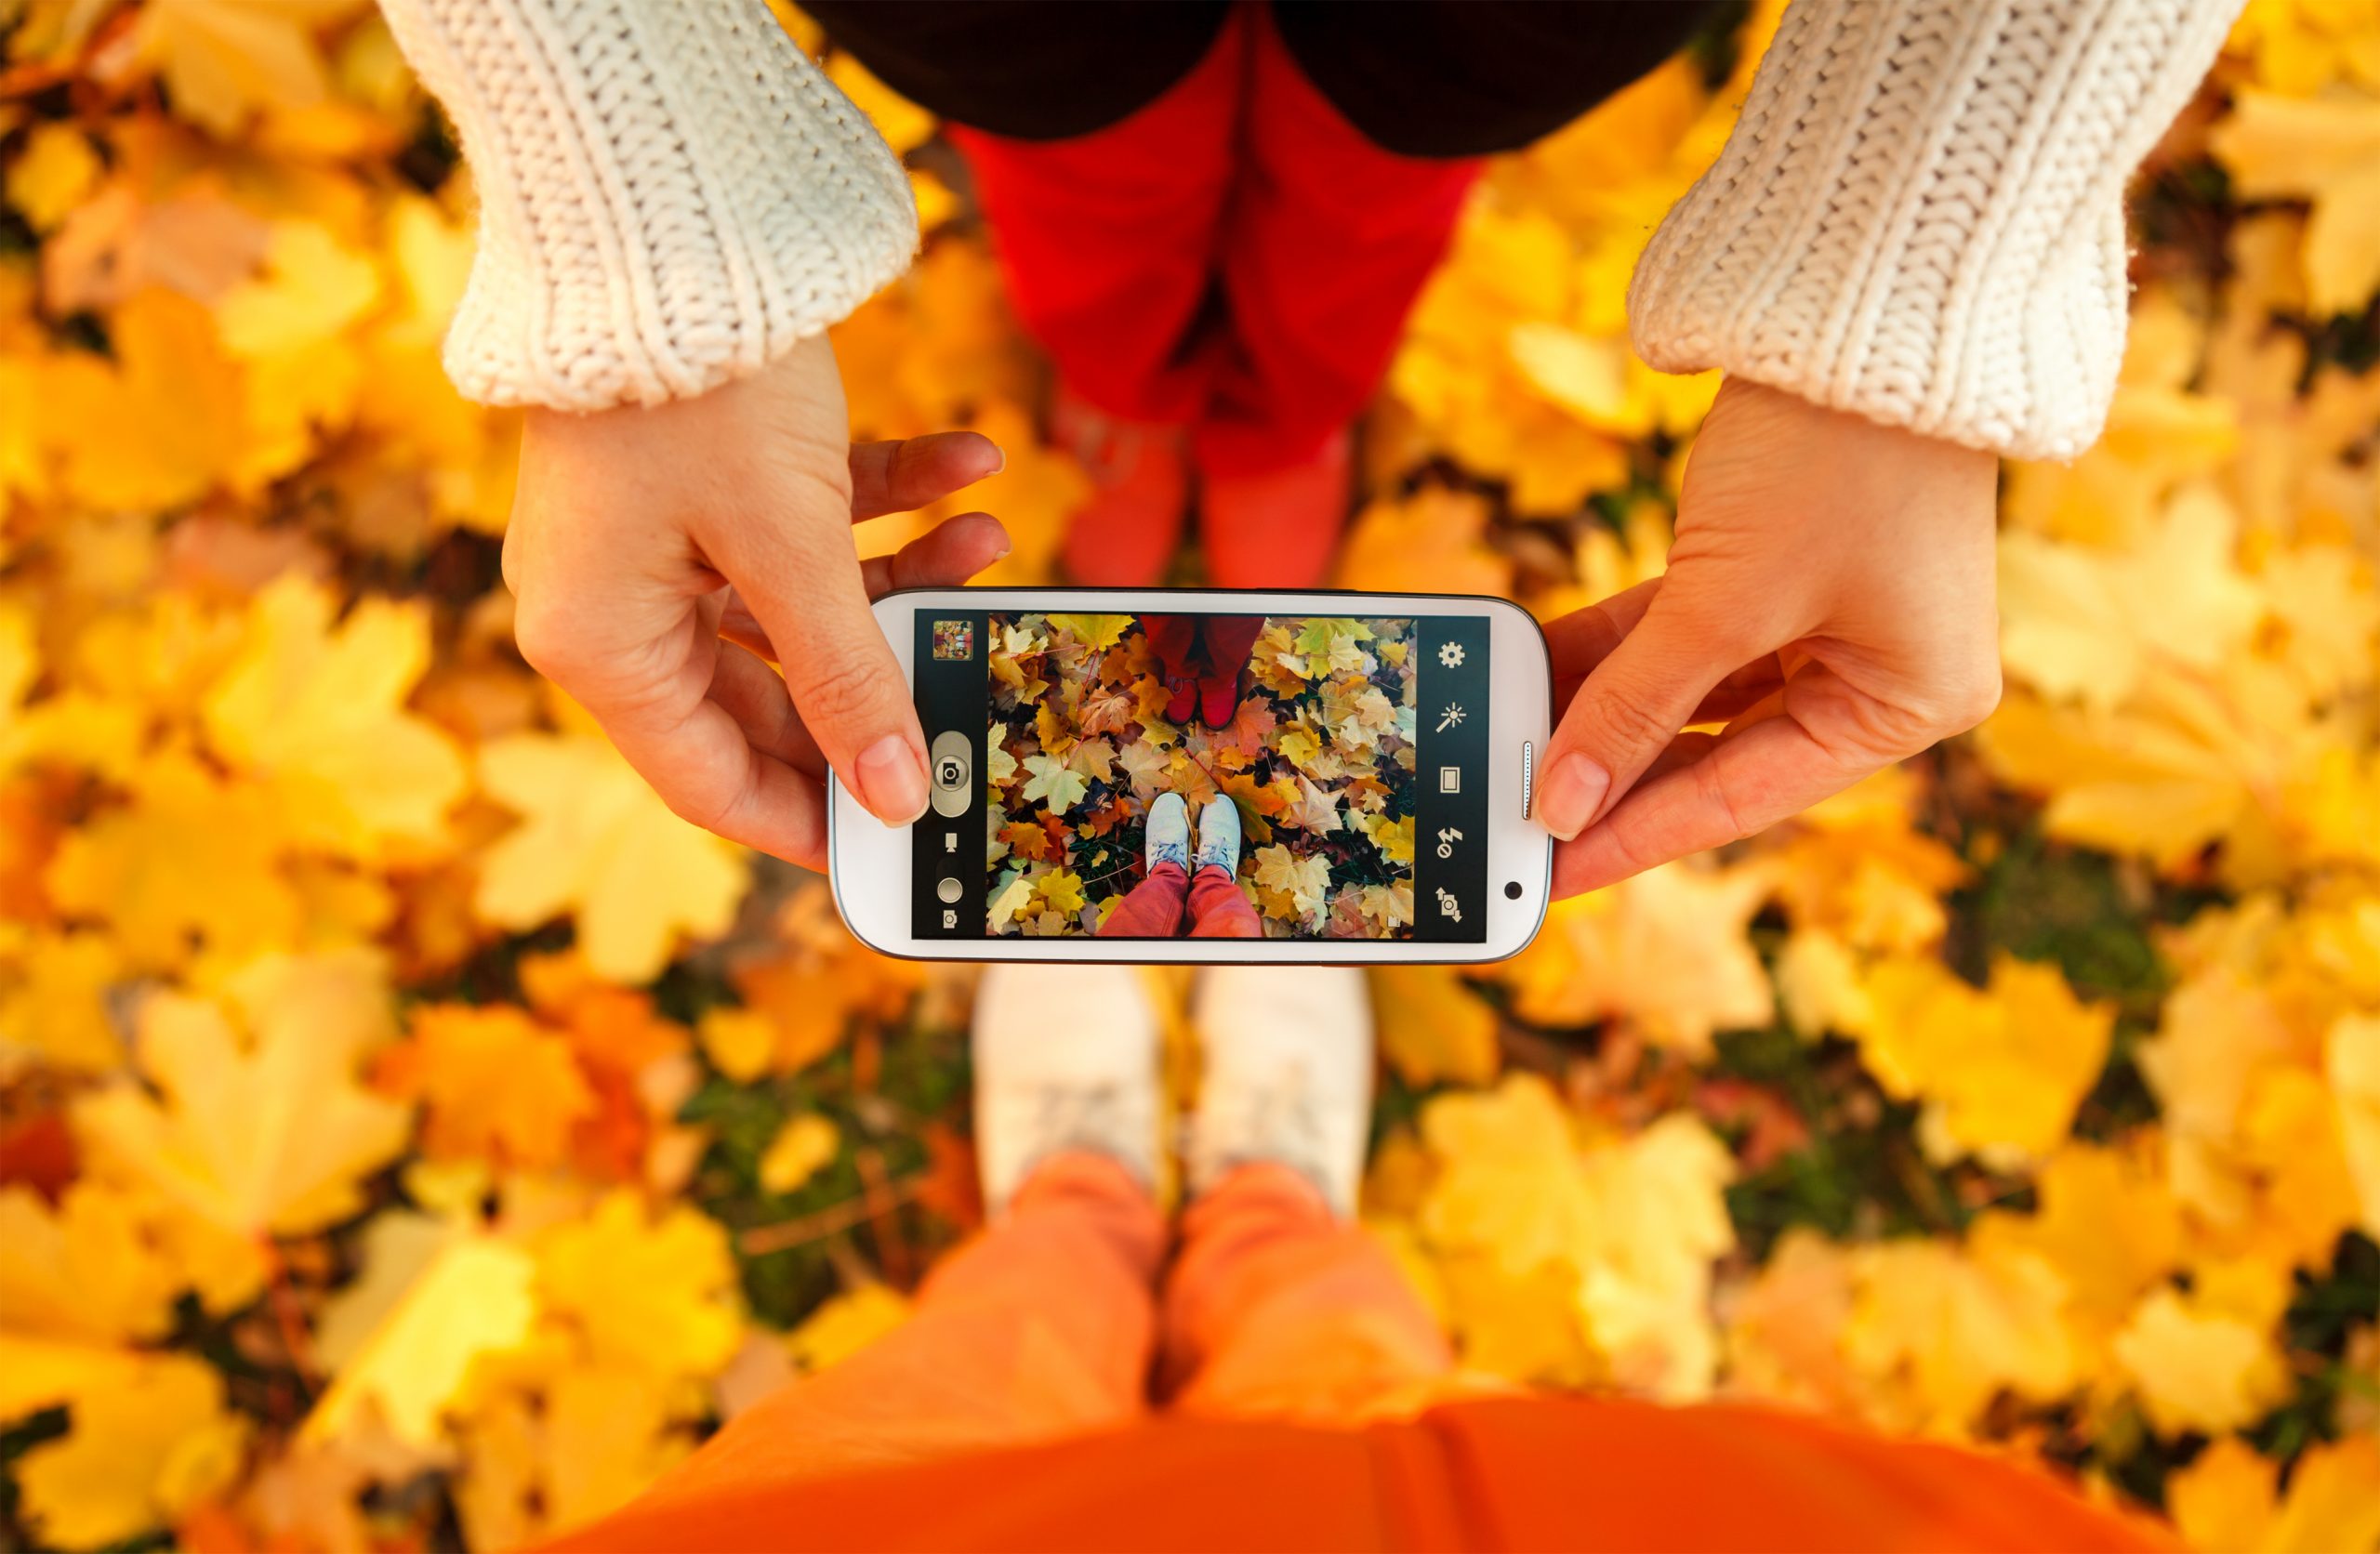 Autumn leaves as seen through smartphone camera